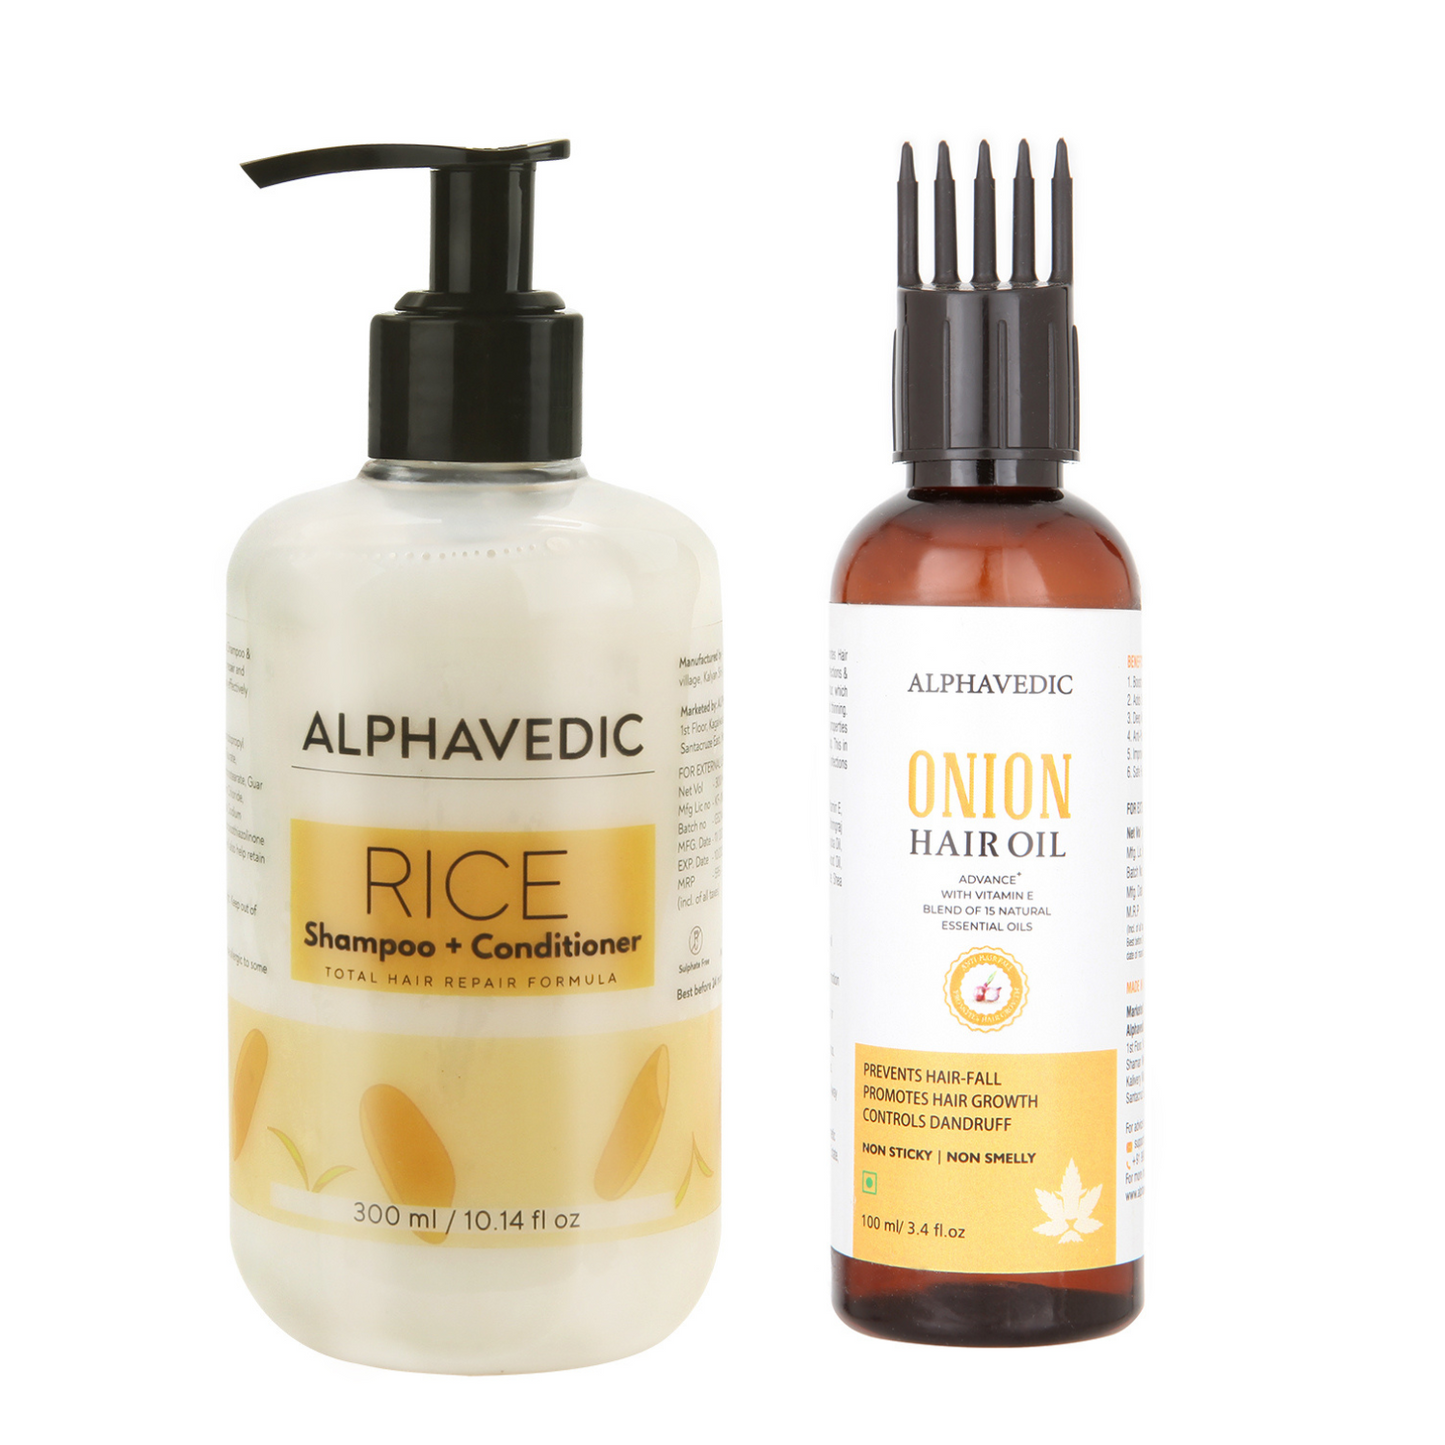 Super Hair Growth Combo - Rice Shampoo + Conditioner & Onion Hair Oil